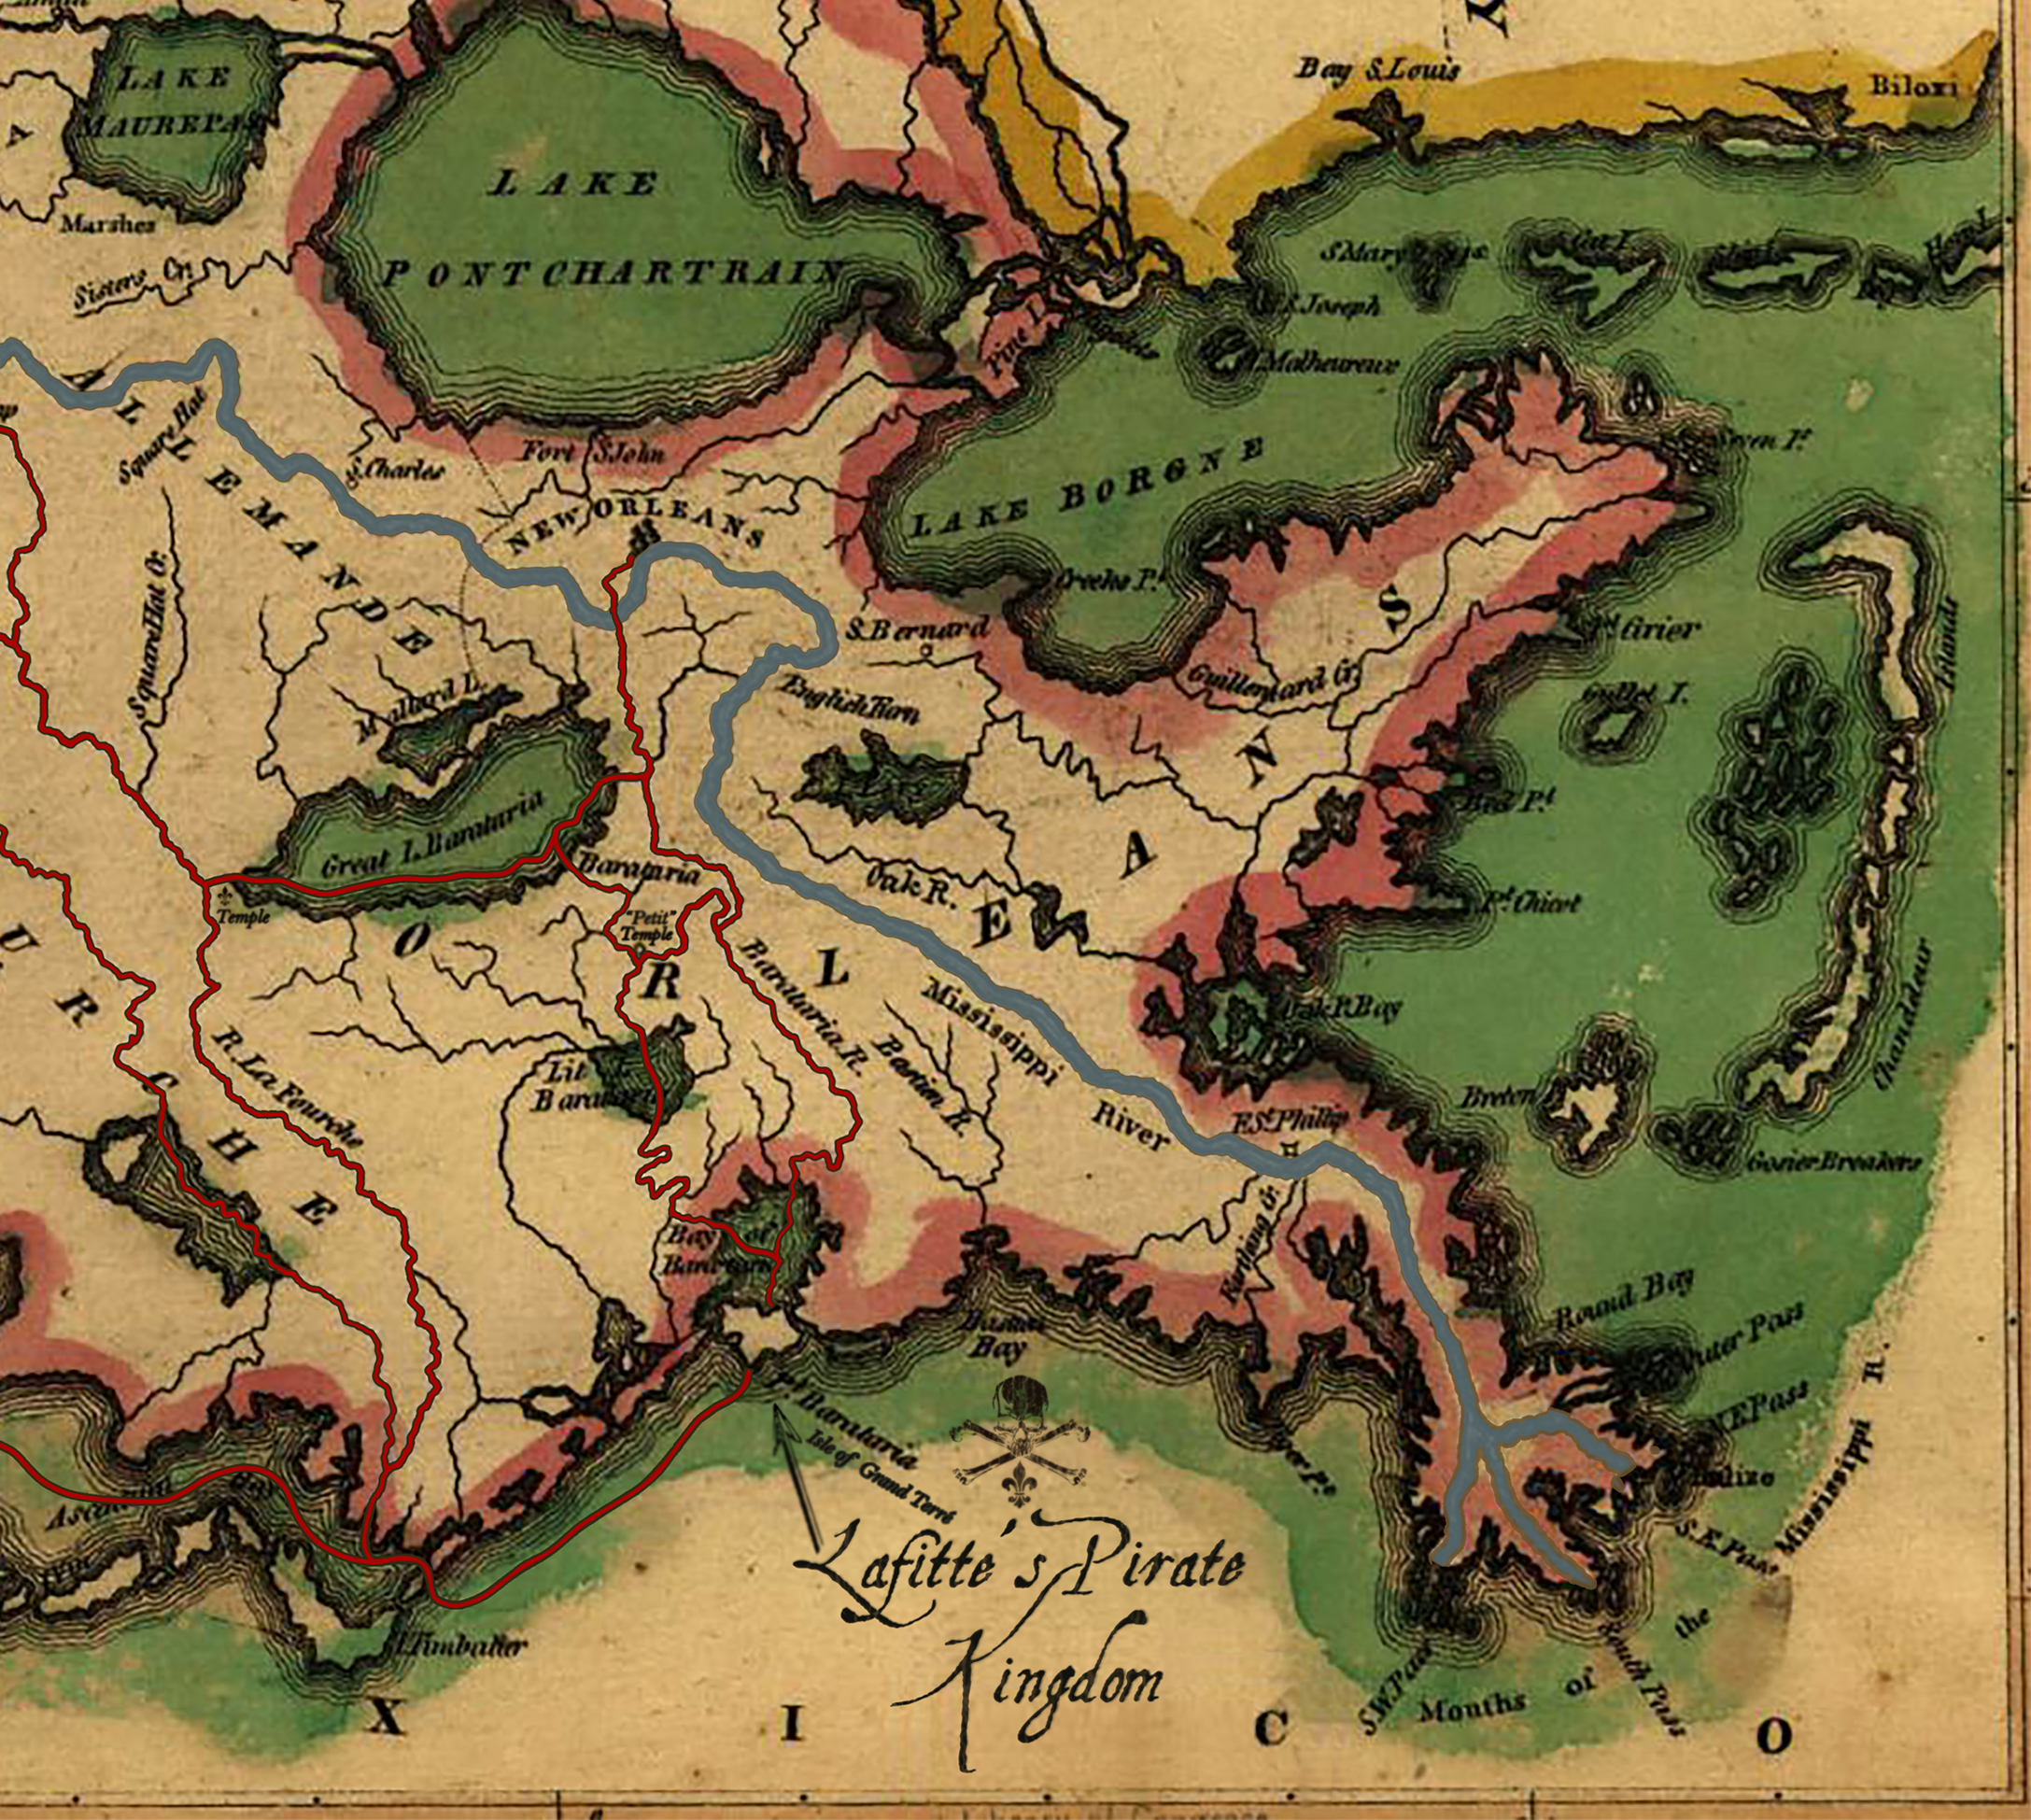 Jean Lafitte's Kingdom of Barataria